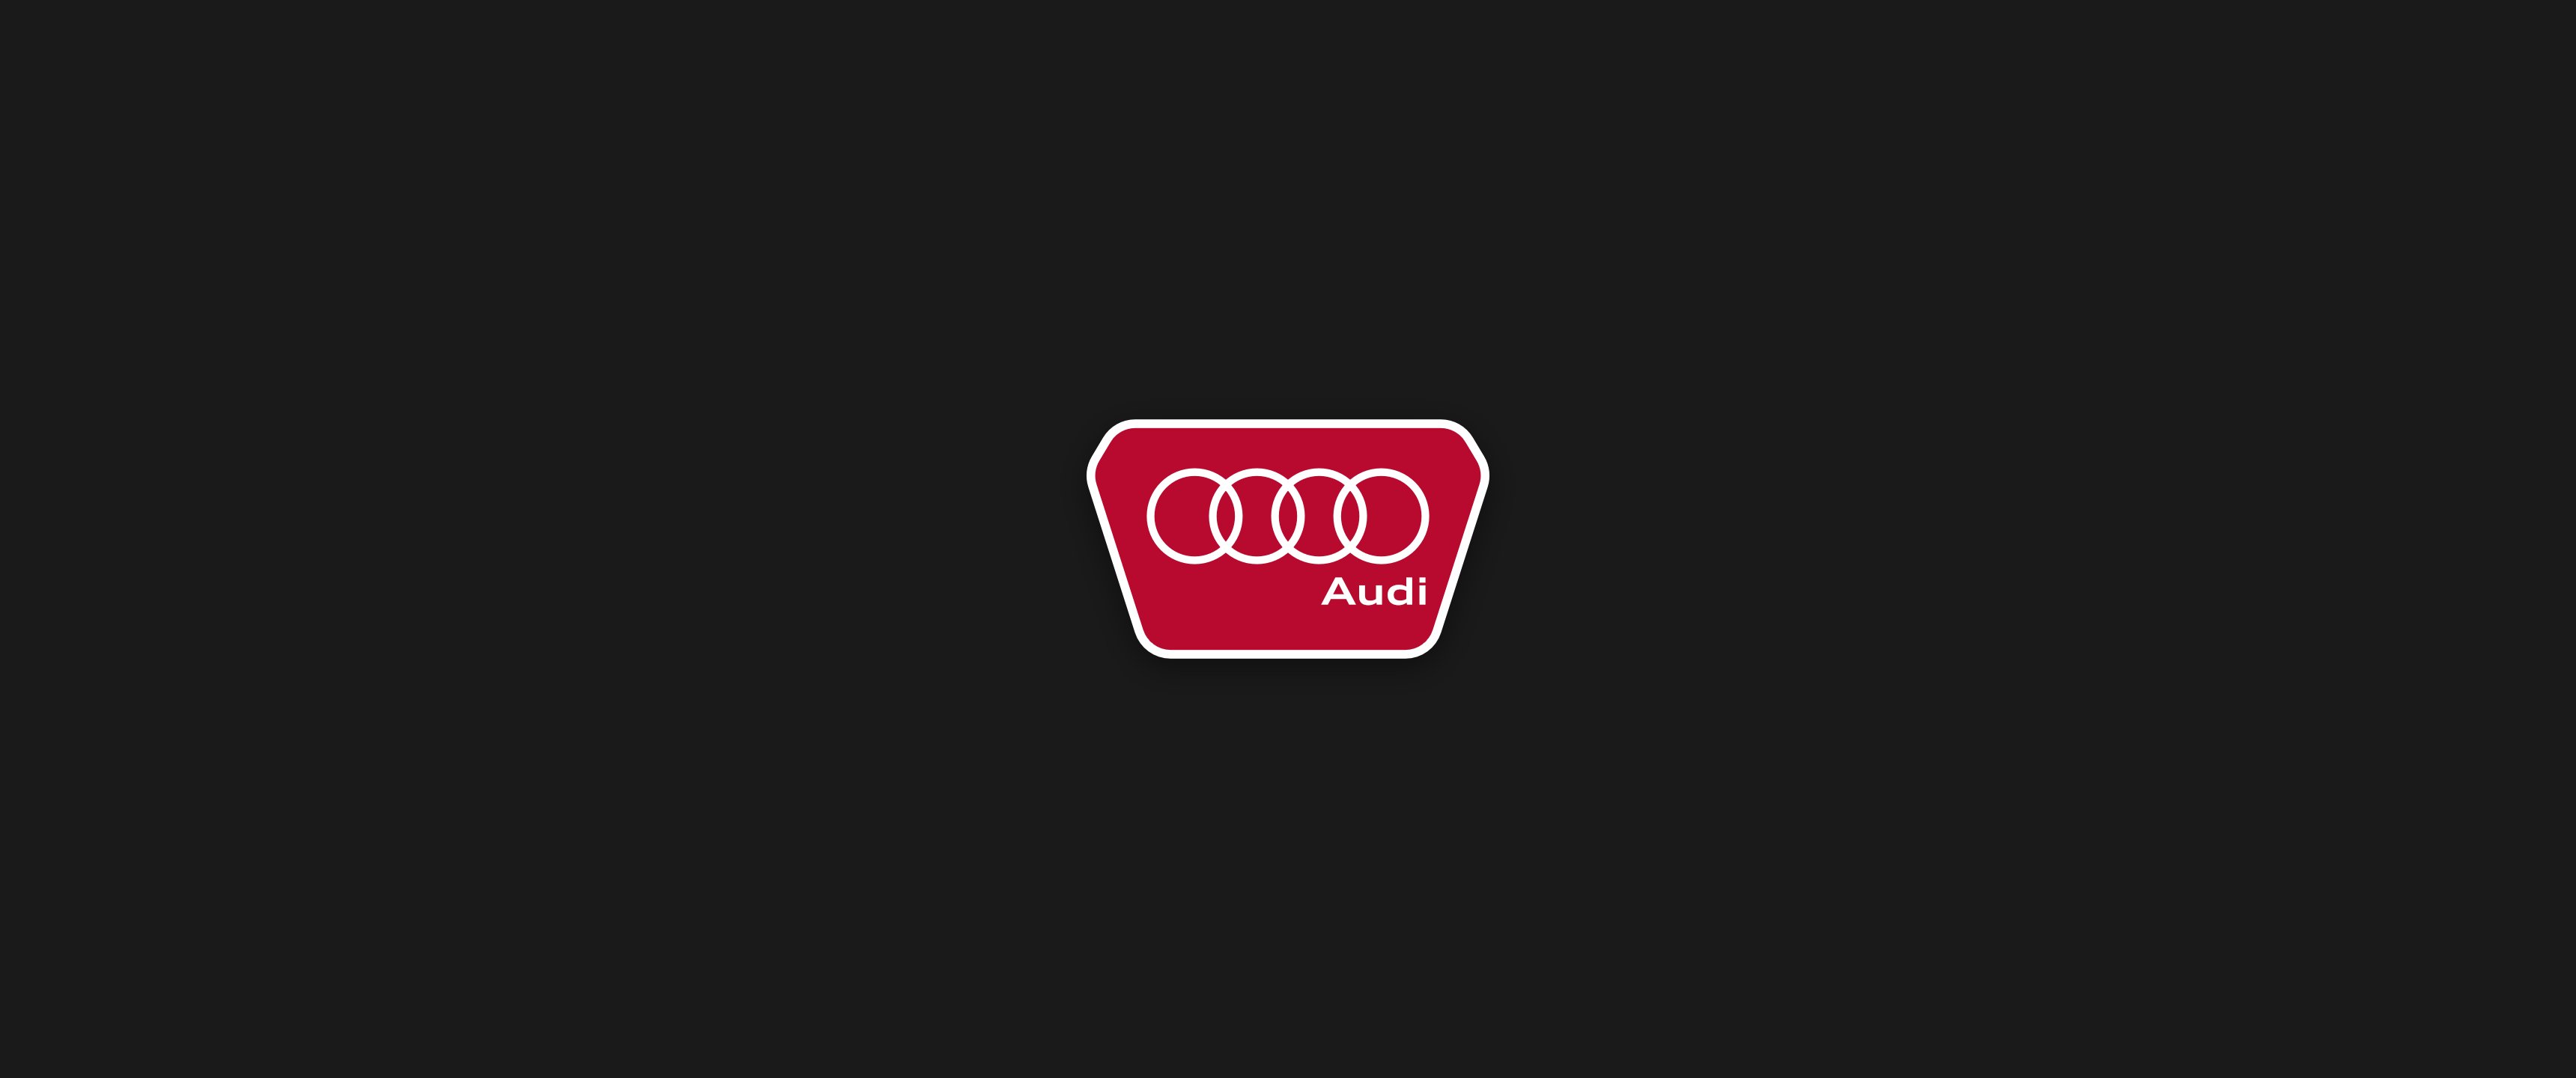 Audi Logo Wallpaper - Sign - 3440x1440 Wallpaper 